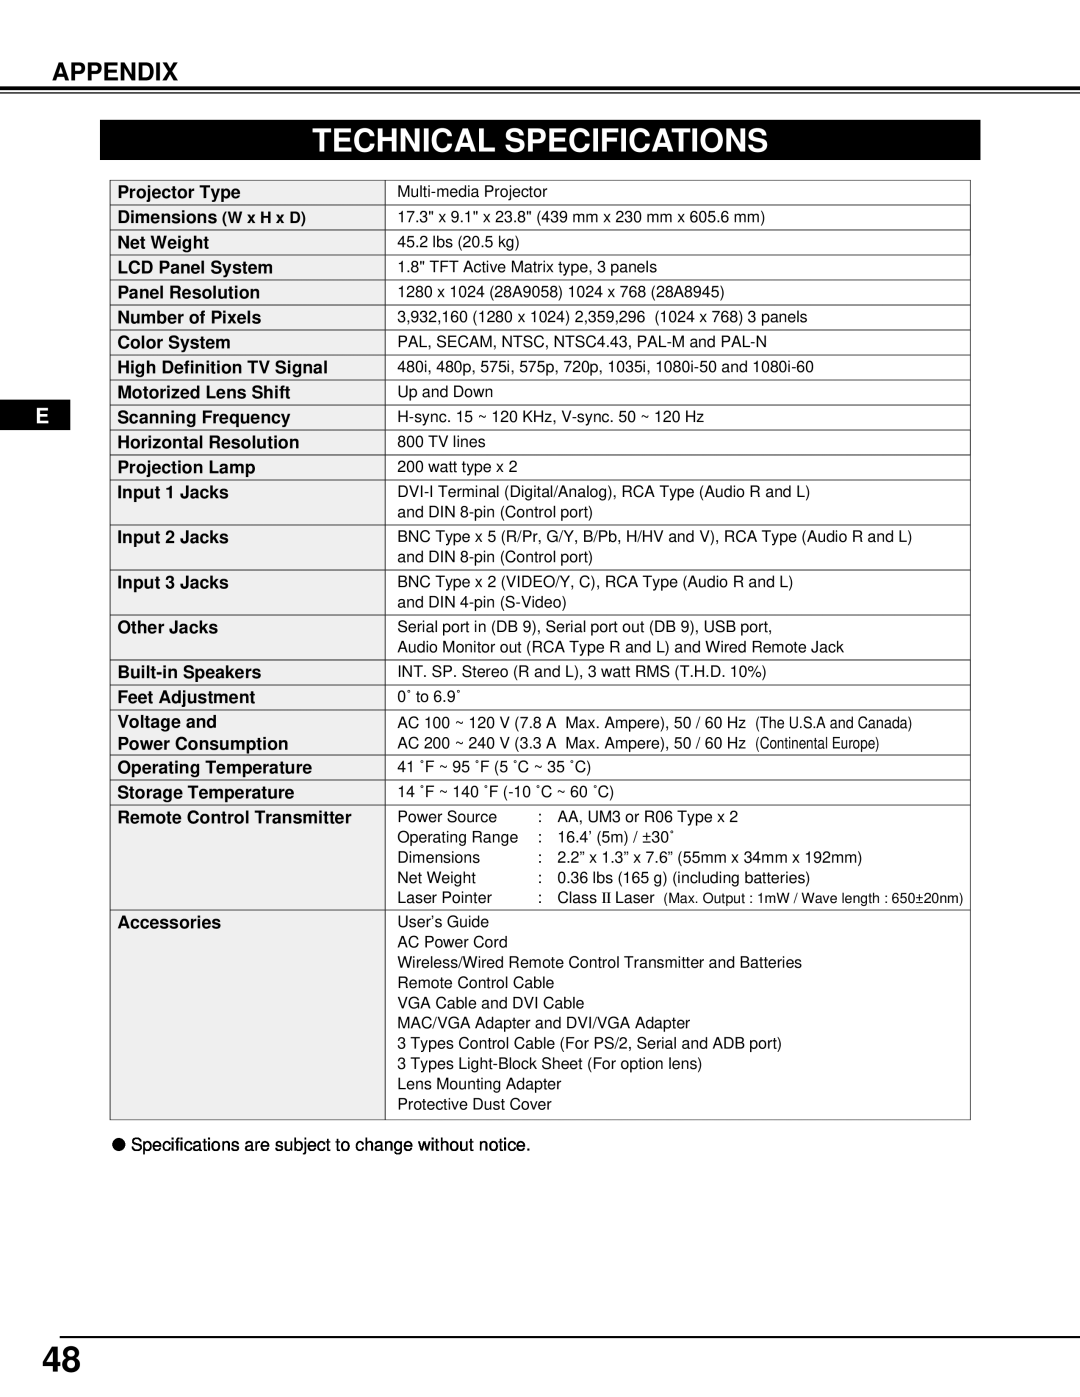 Dukane 28A9058, 28A8945 manual Technical Specifications, Appendix 